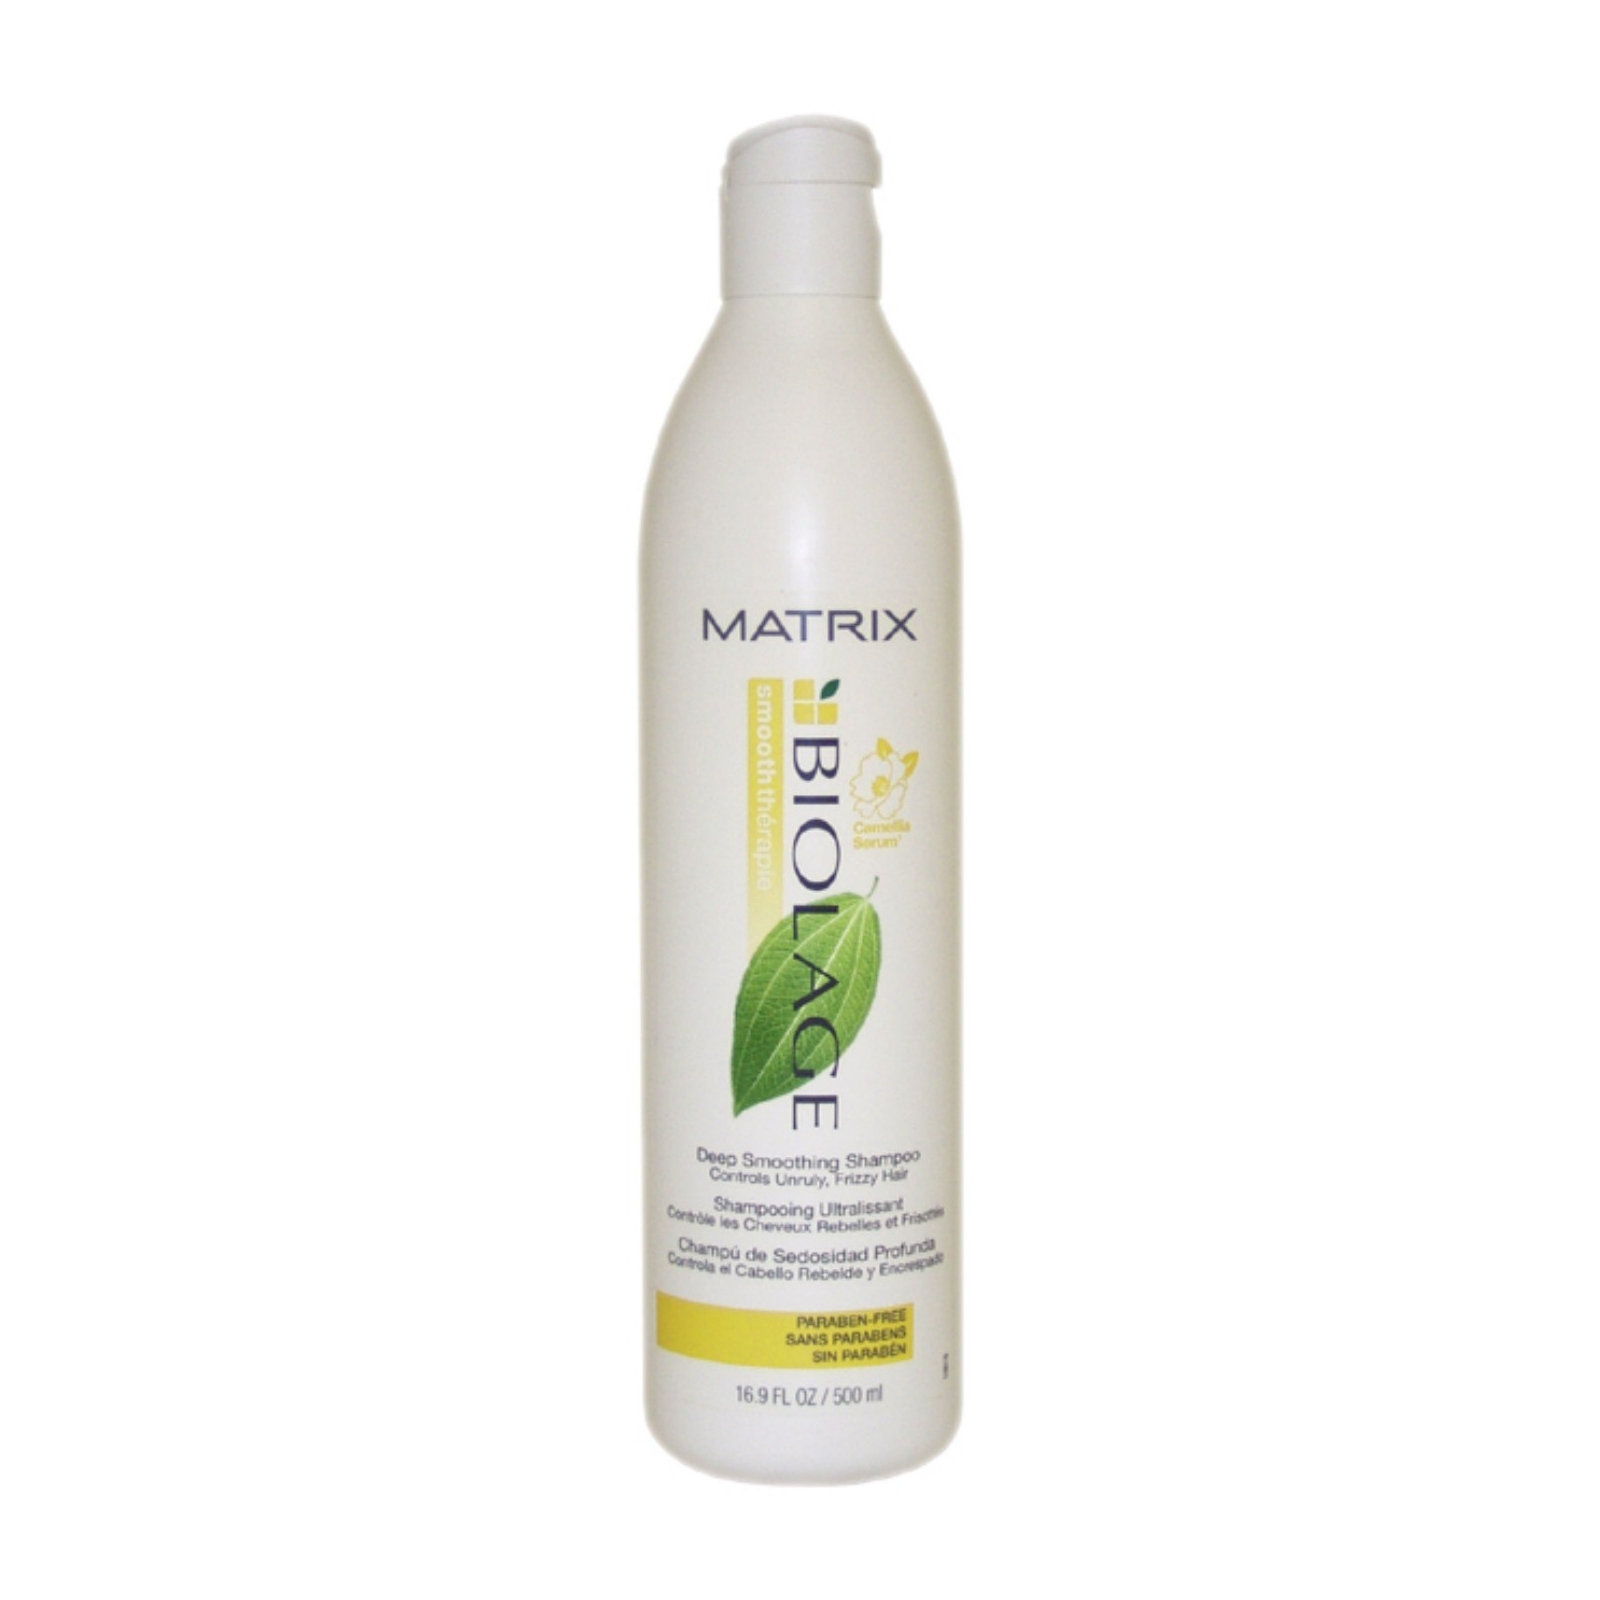 Matrix Biolage Smooththerapie Deep Smoothing Shampoo by  for Unisex - 16.9 oz Shampoo